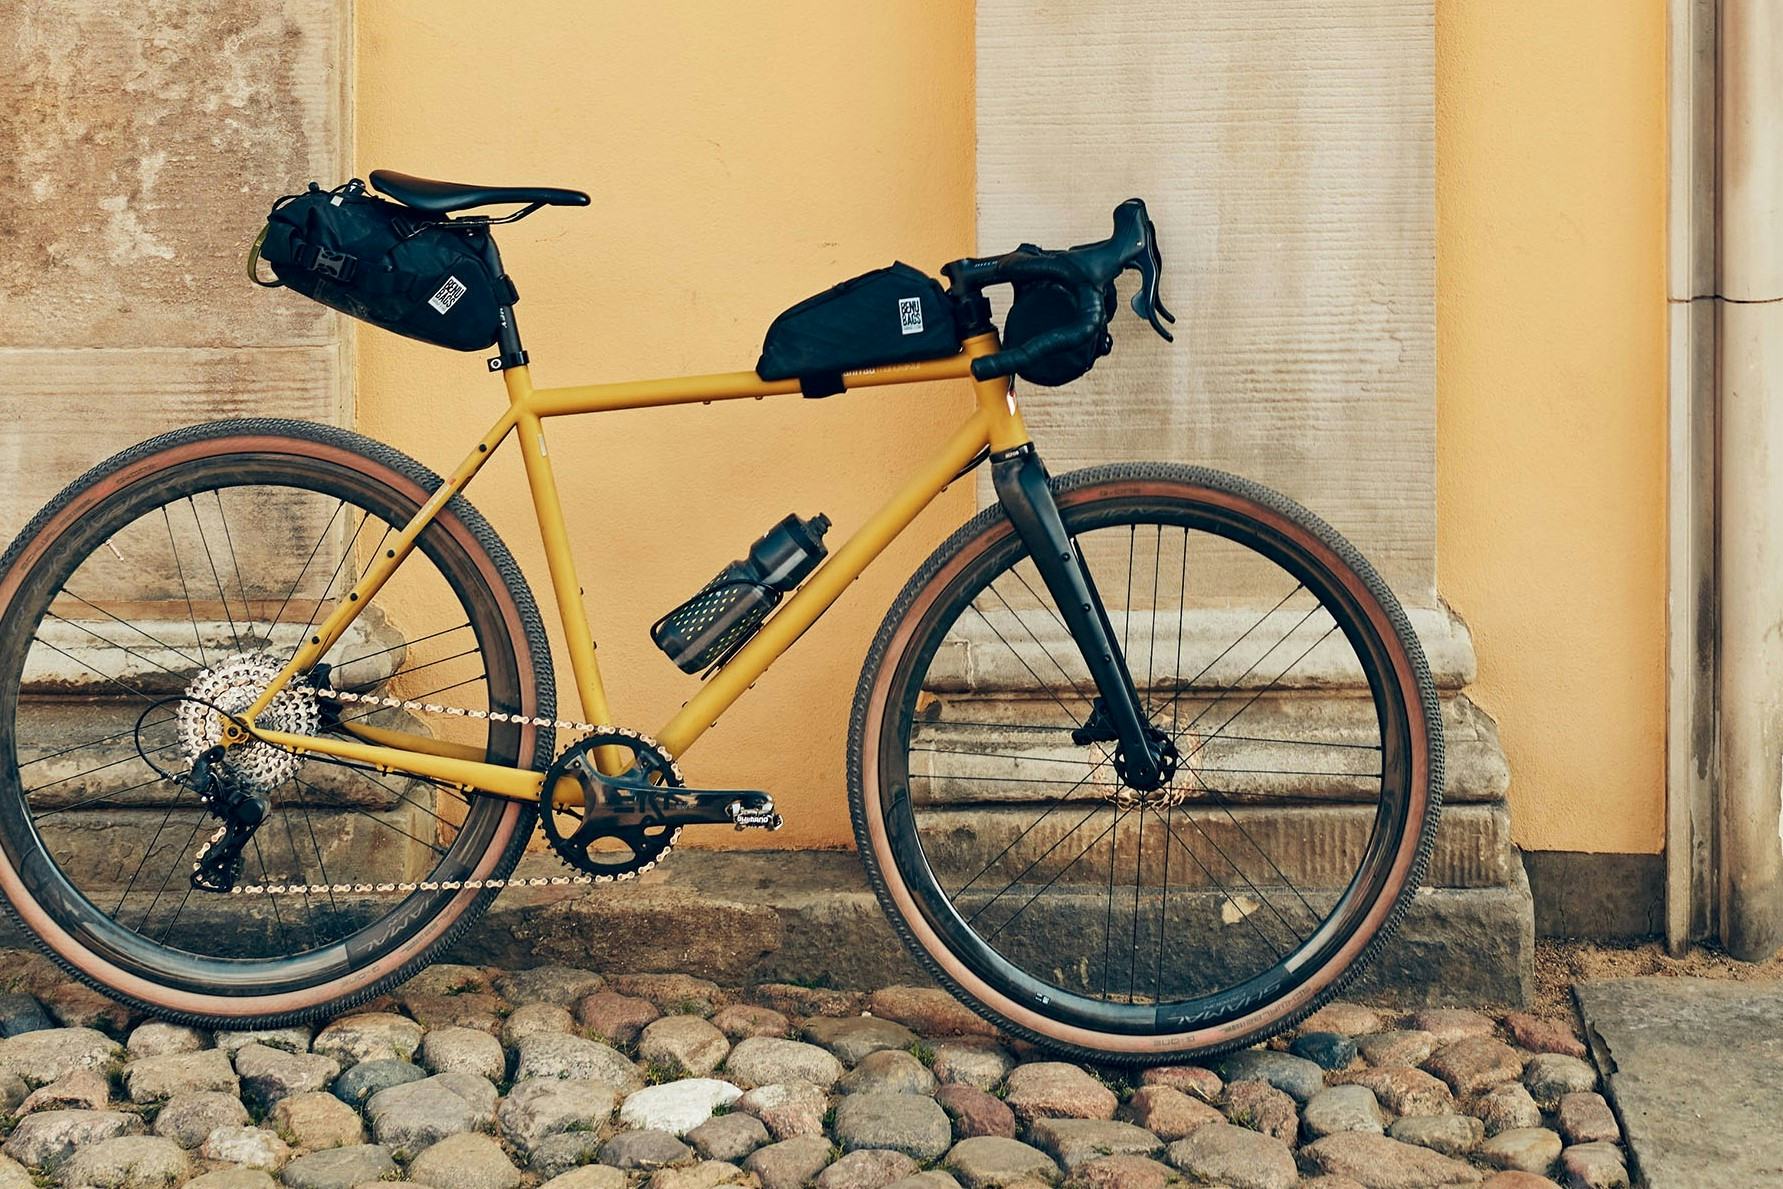 vsf fahrradmanufaktur is a Cycle Union brand. Photo: Cycle Union 